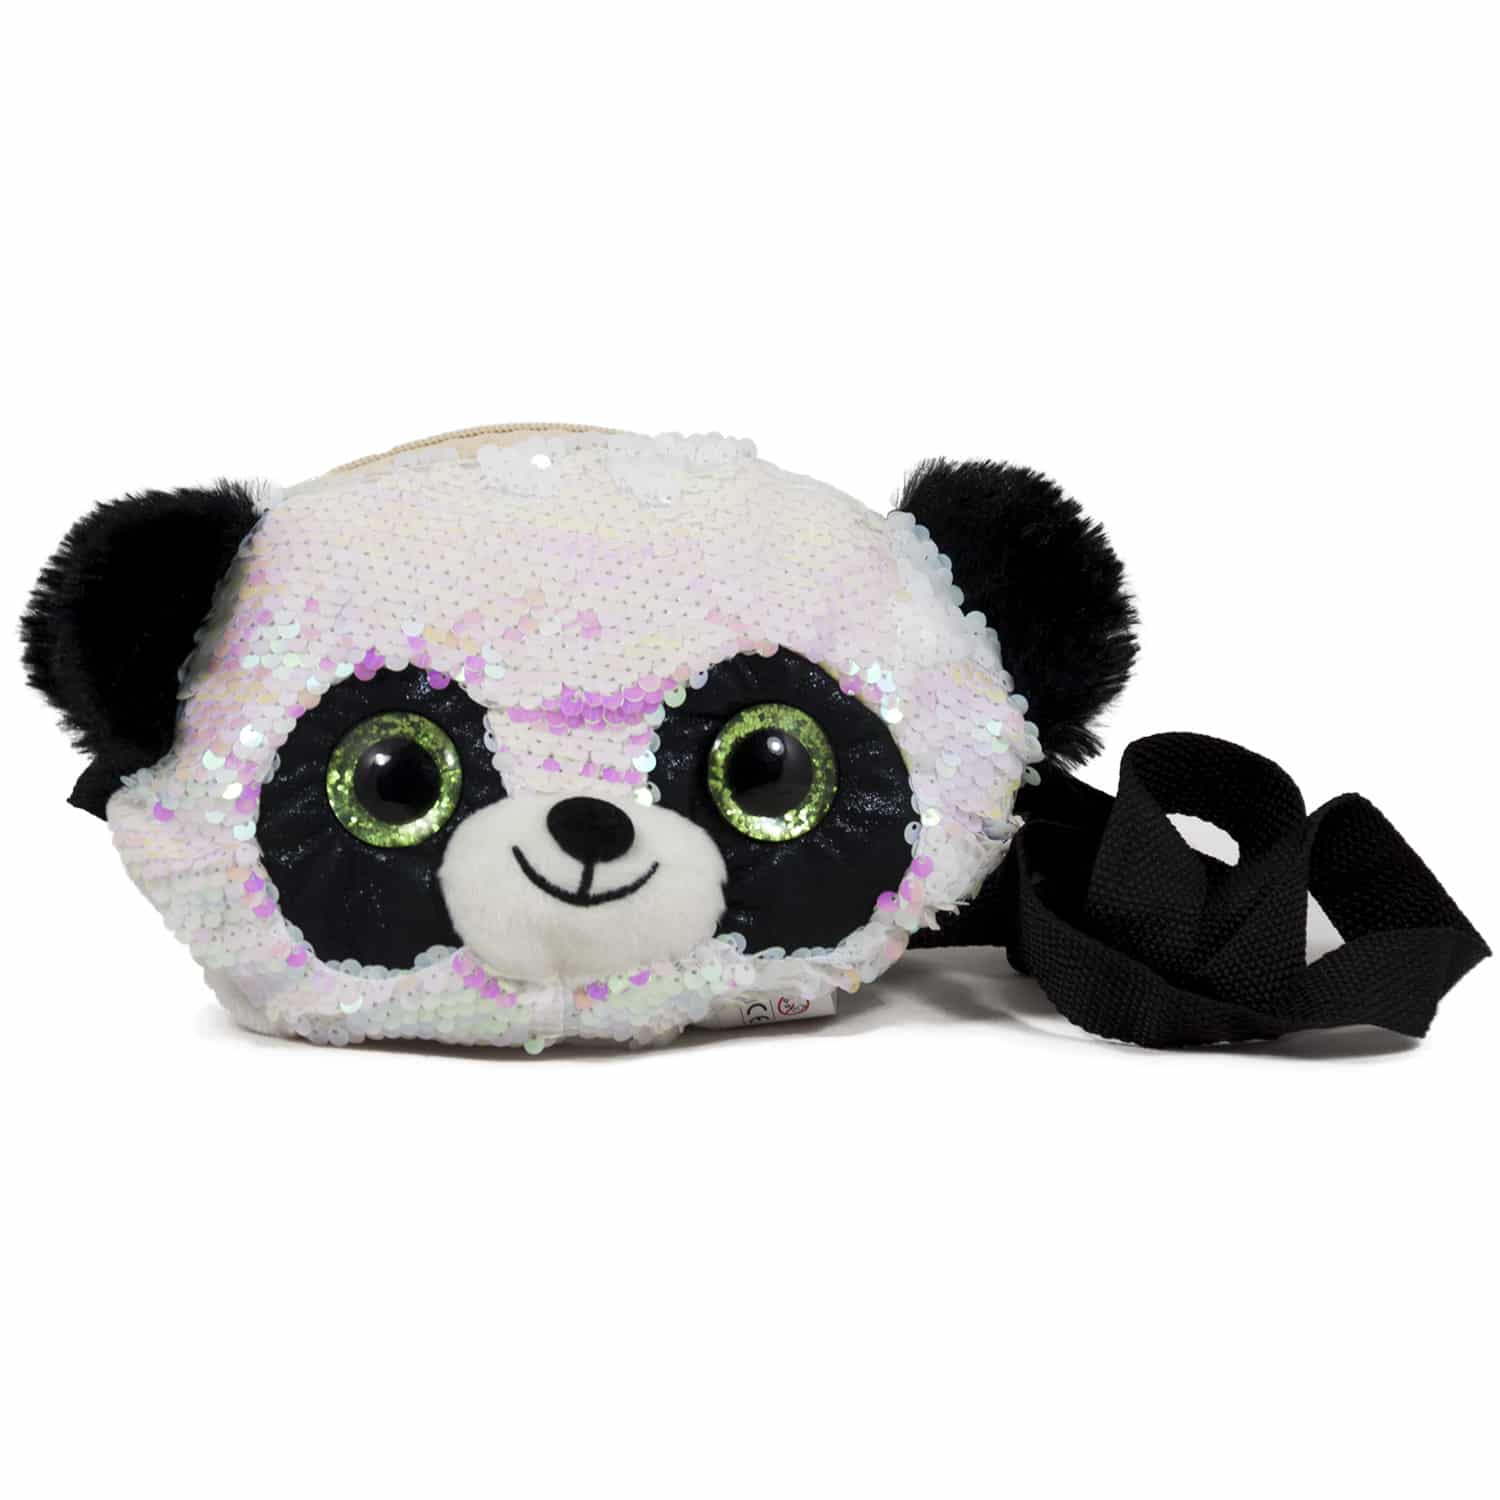 Bag - Panda with sequins